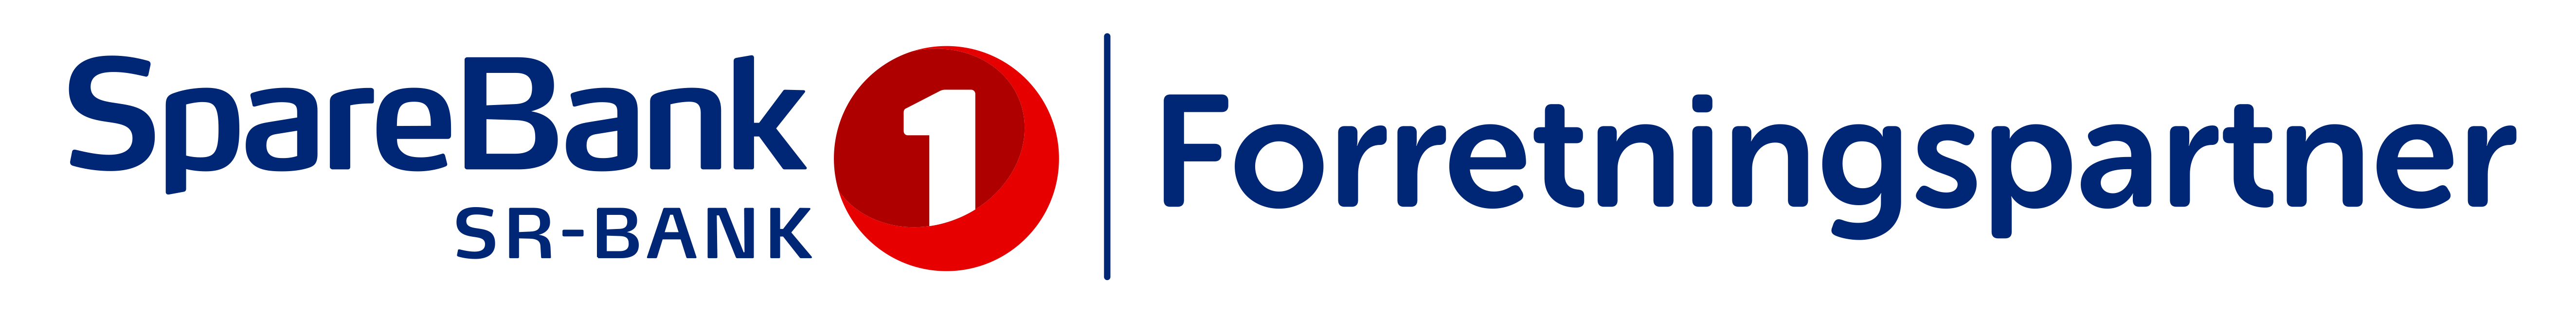 SR-Bank Forretningspartner logo